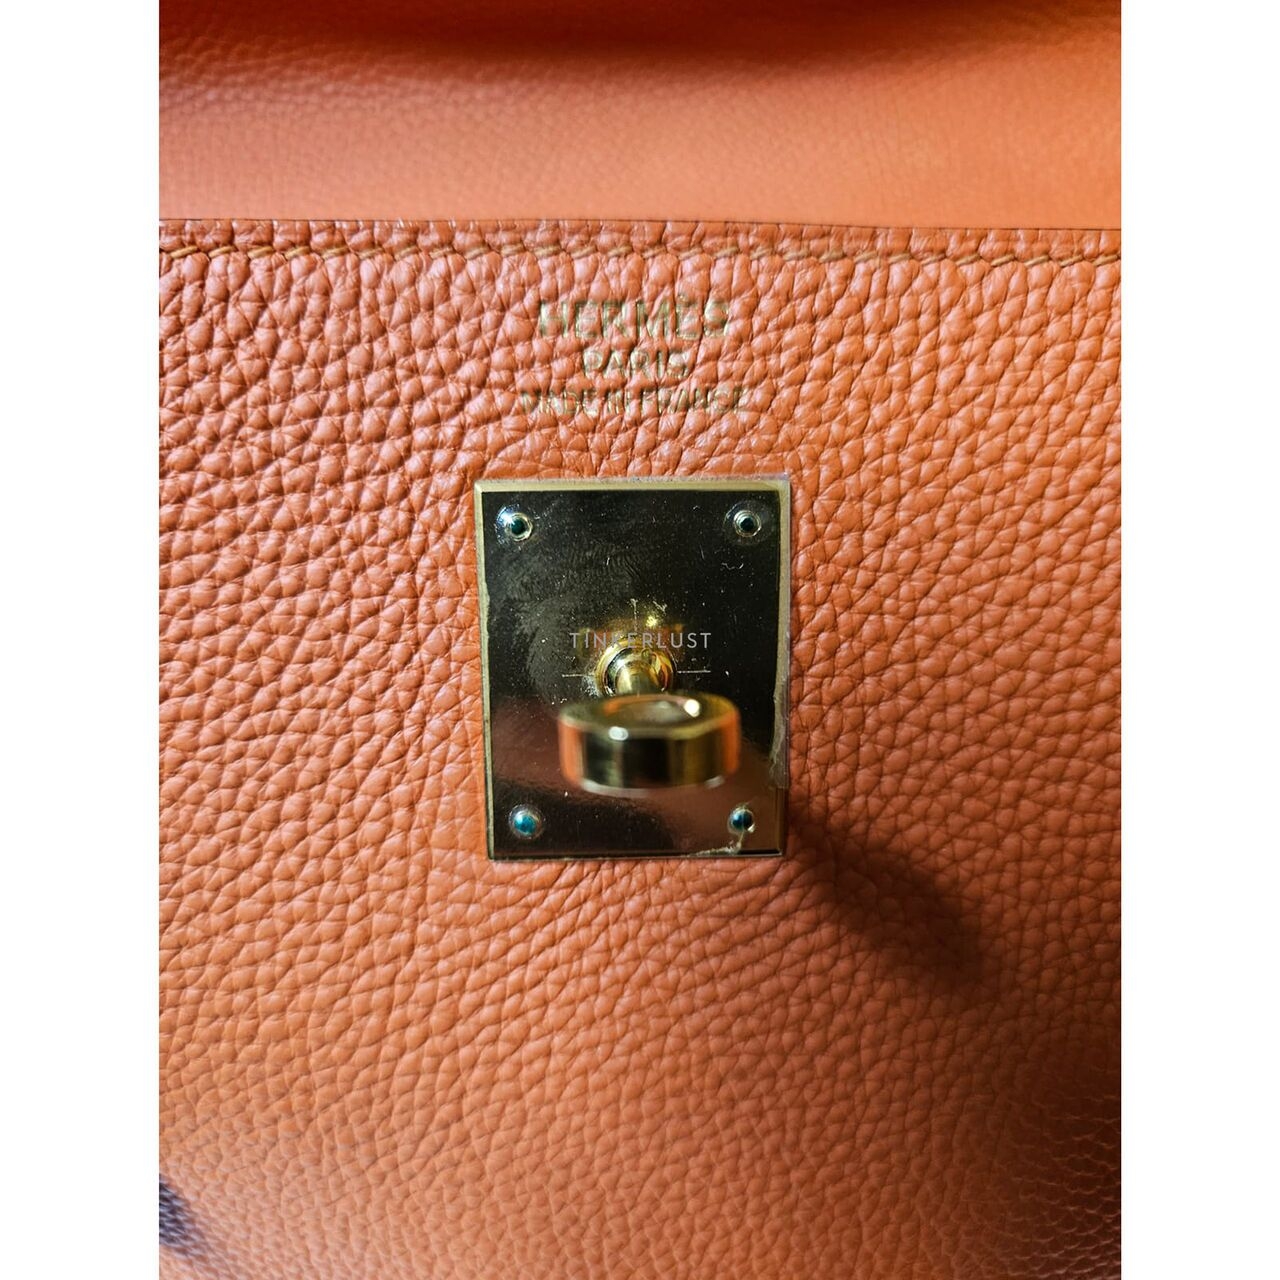 Hermes Kelly 35 Orange Togo Leather #N GHW Satchel